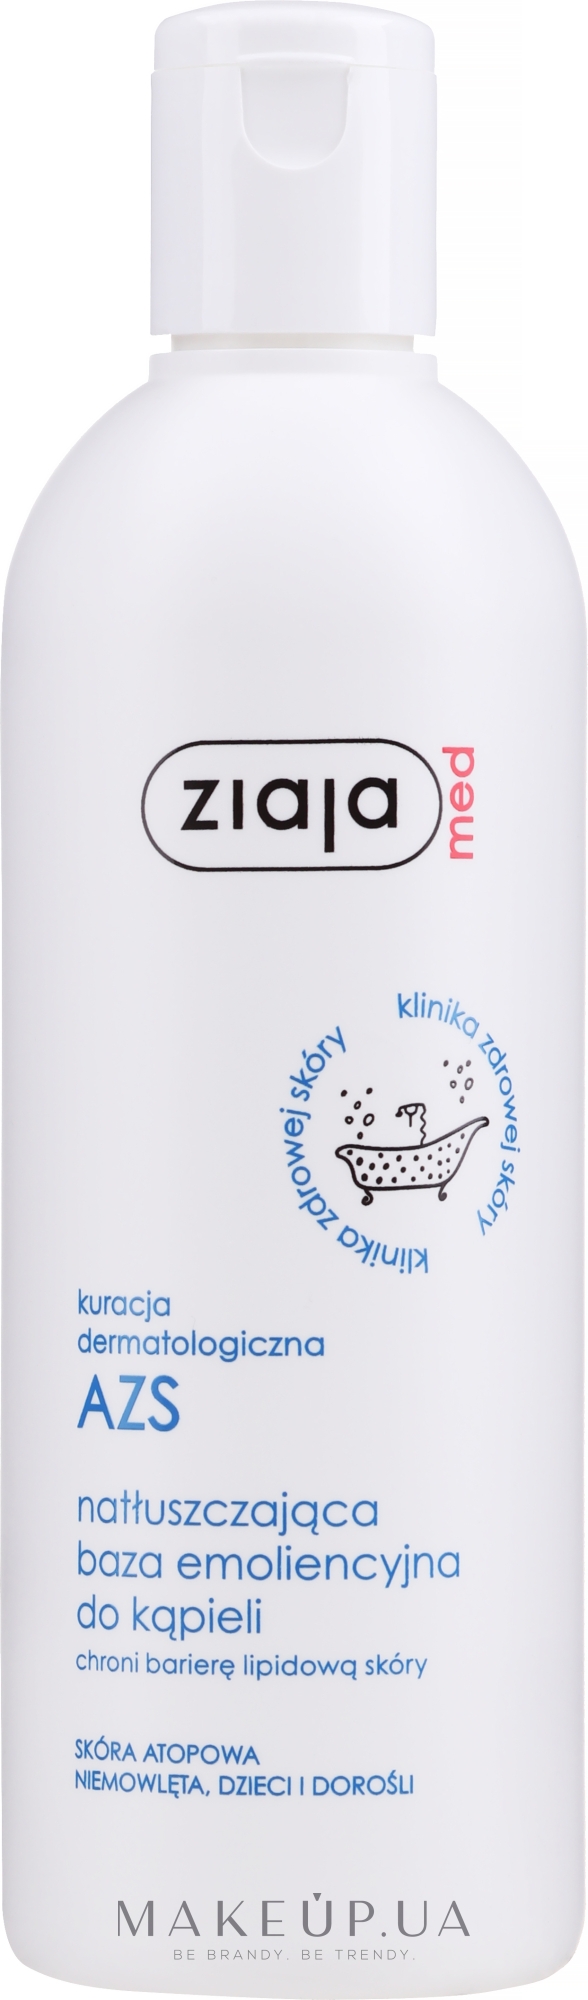 Жидкое смягчающее средство для ванны - Ziaja Med Dermatological Treatment AZS Oiling Base for Bathing — фото 270ml